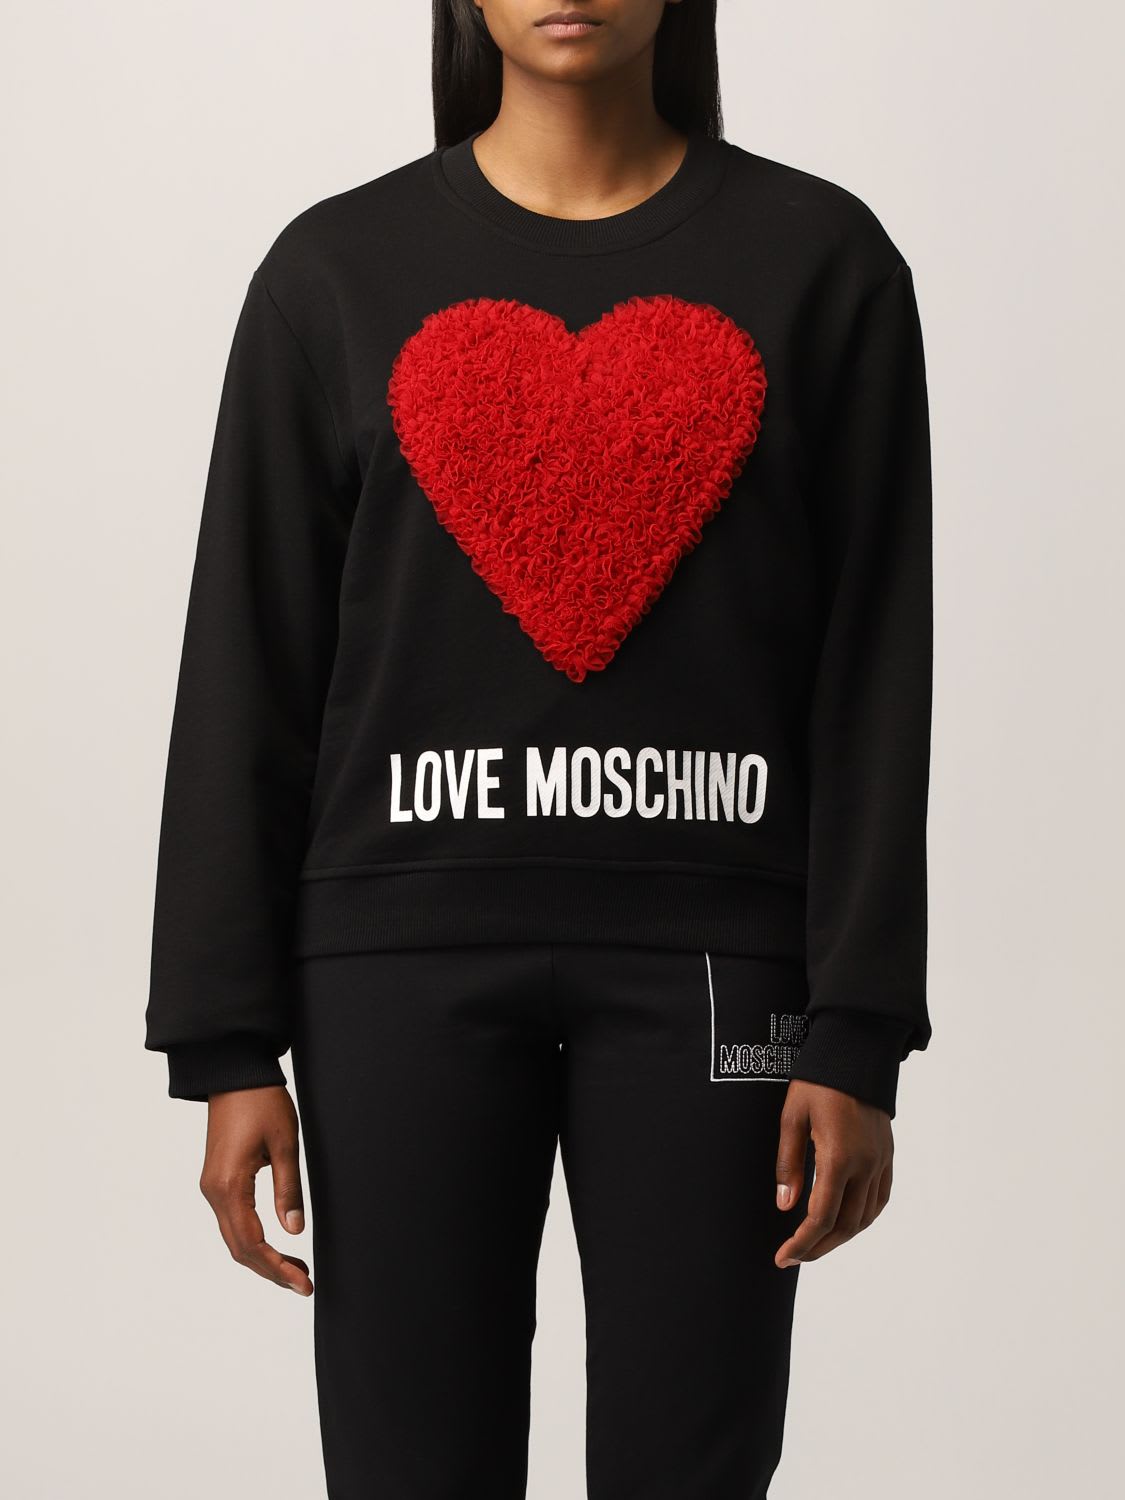 Love Moschino Sweatshirt Round Neck With Rouche Heart